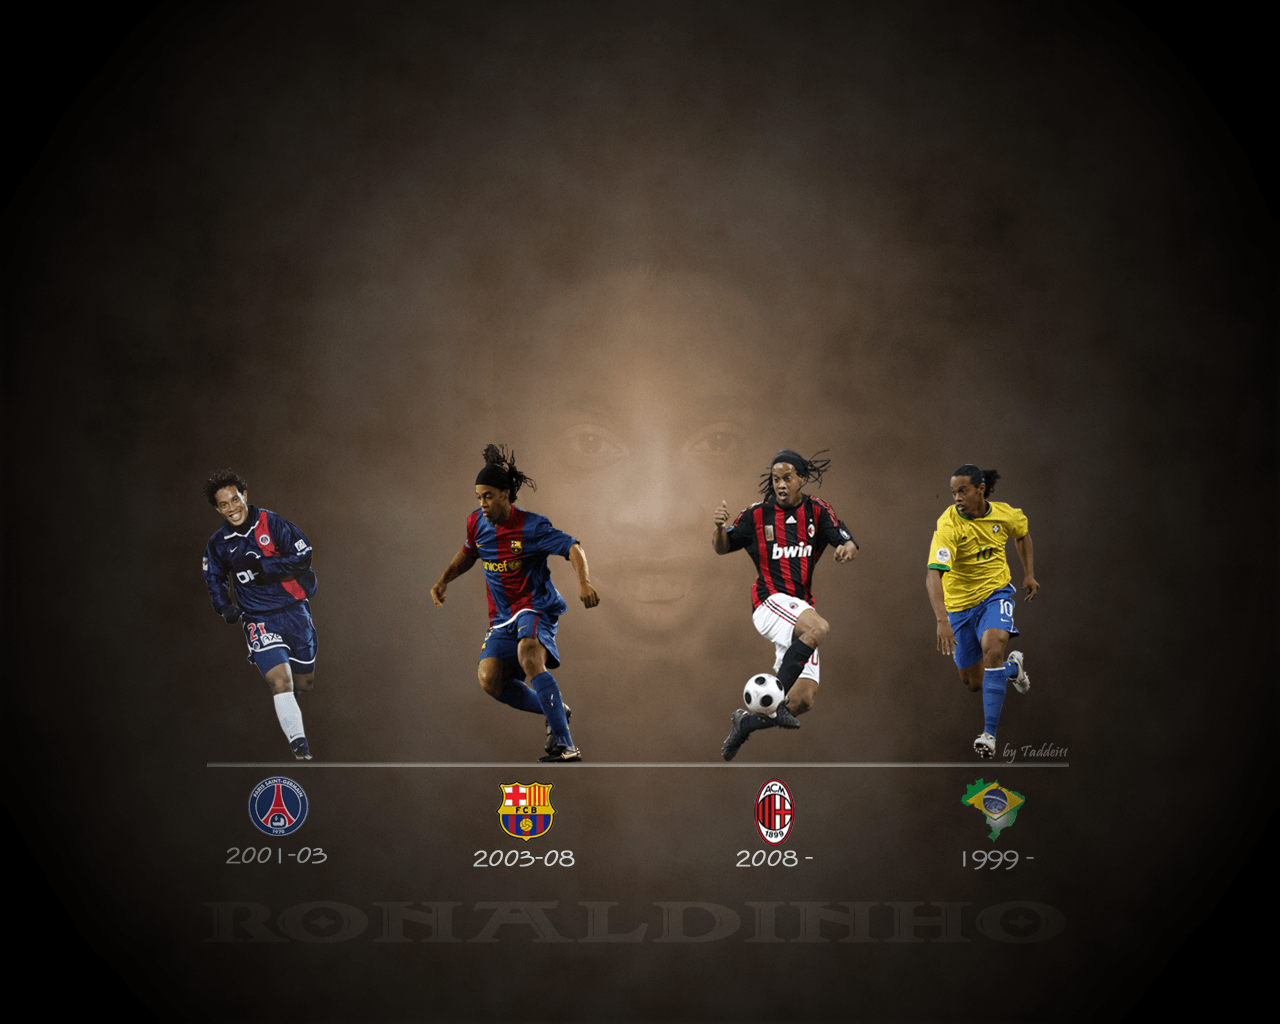 Ronaldinho Best Free Kick Takers in Football (Soccer). Football